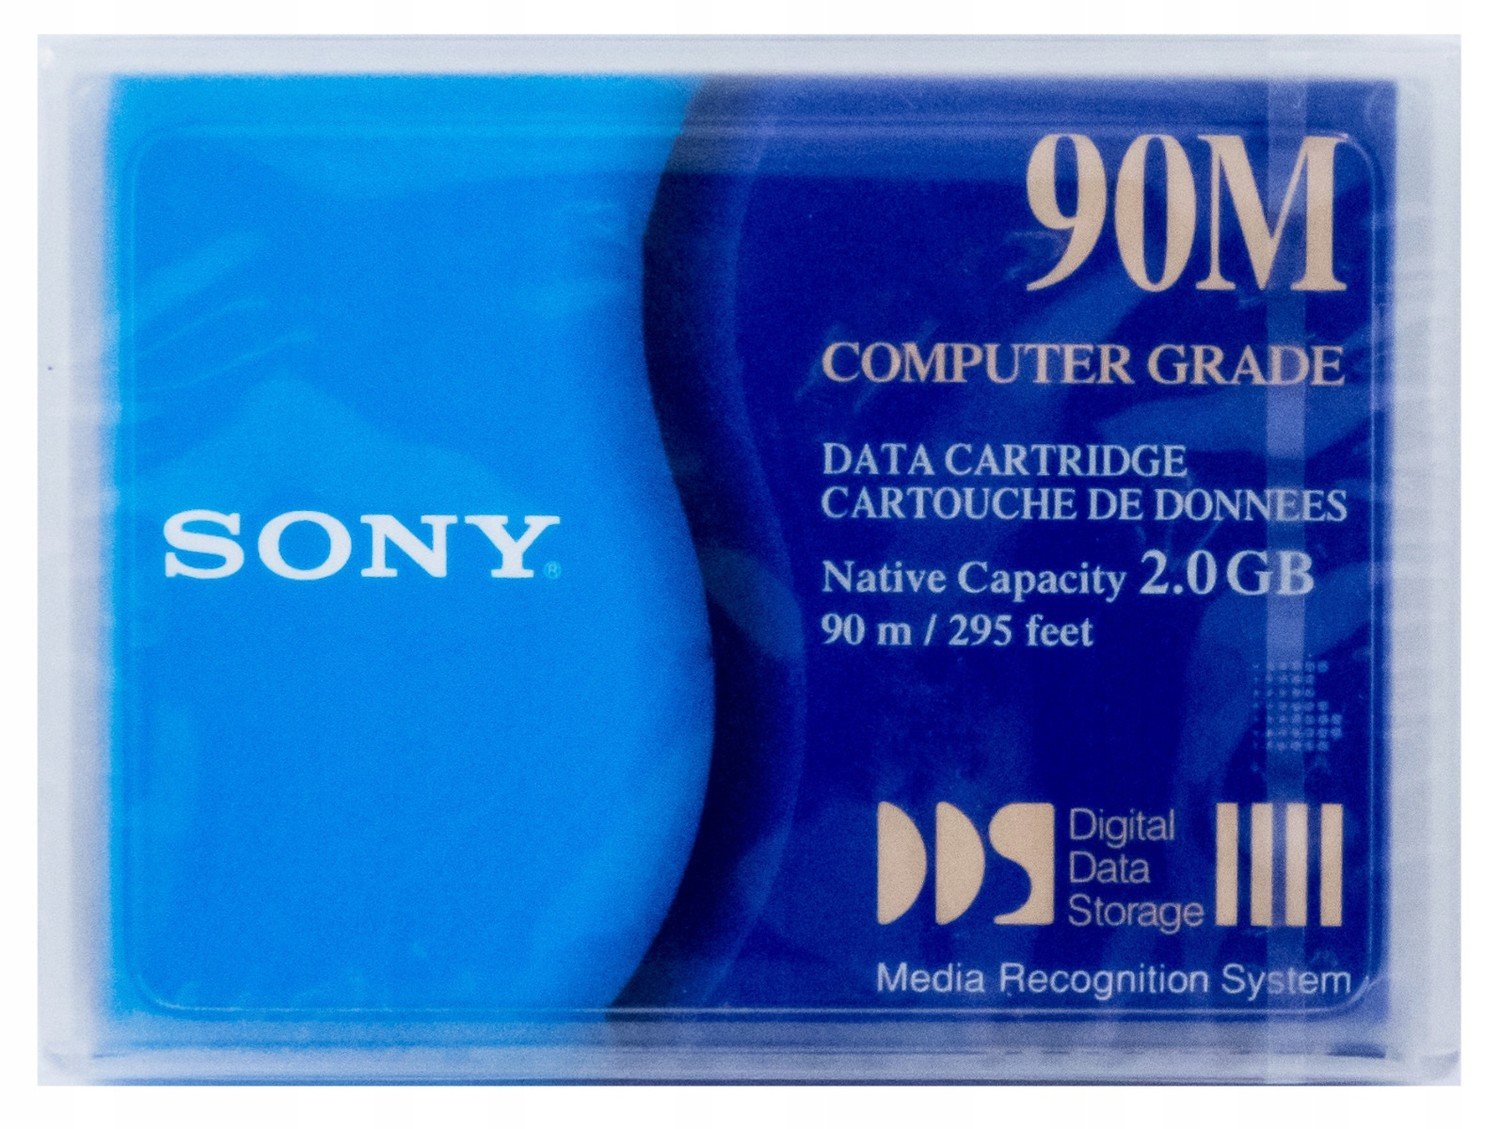 Datová Karta Sony DG90M Dds 2/4GB 4MM 90M